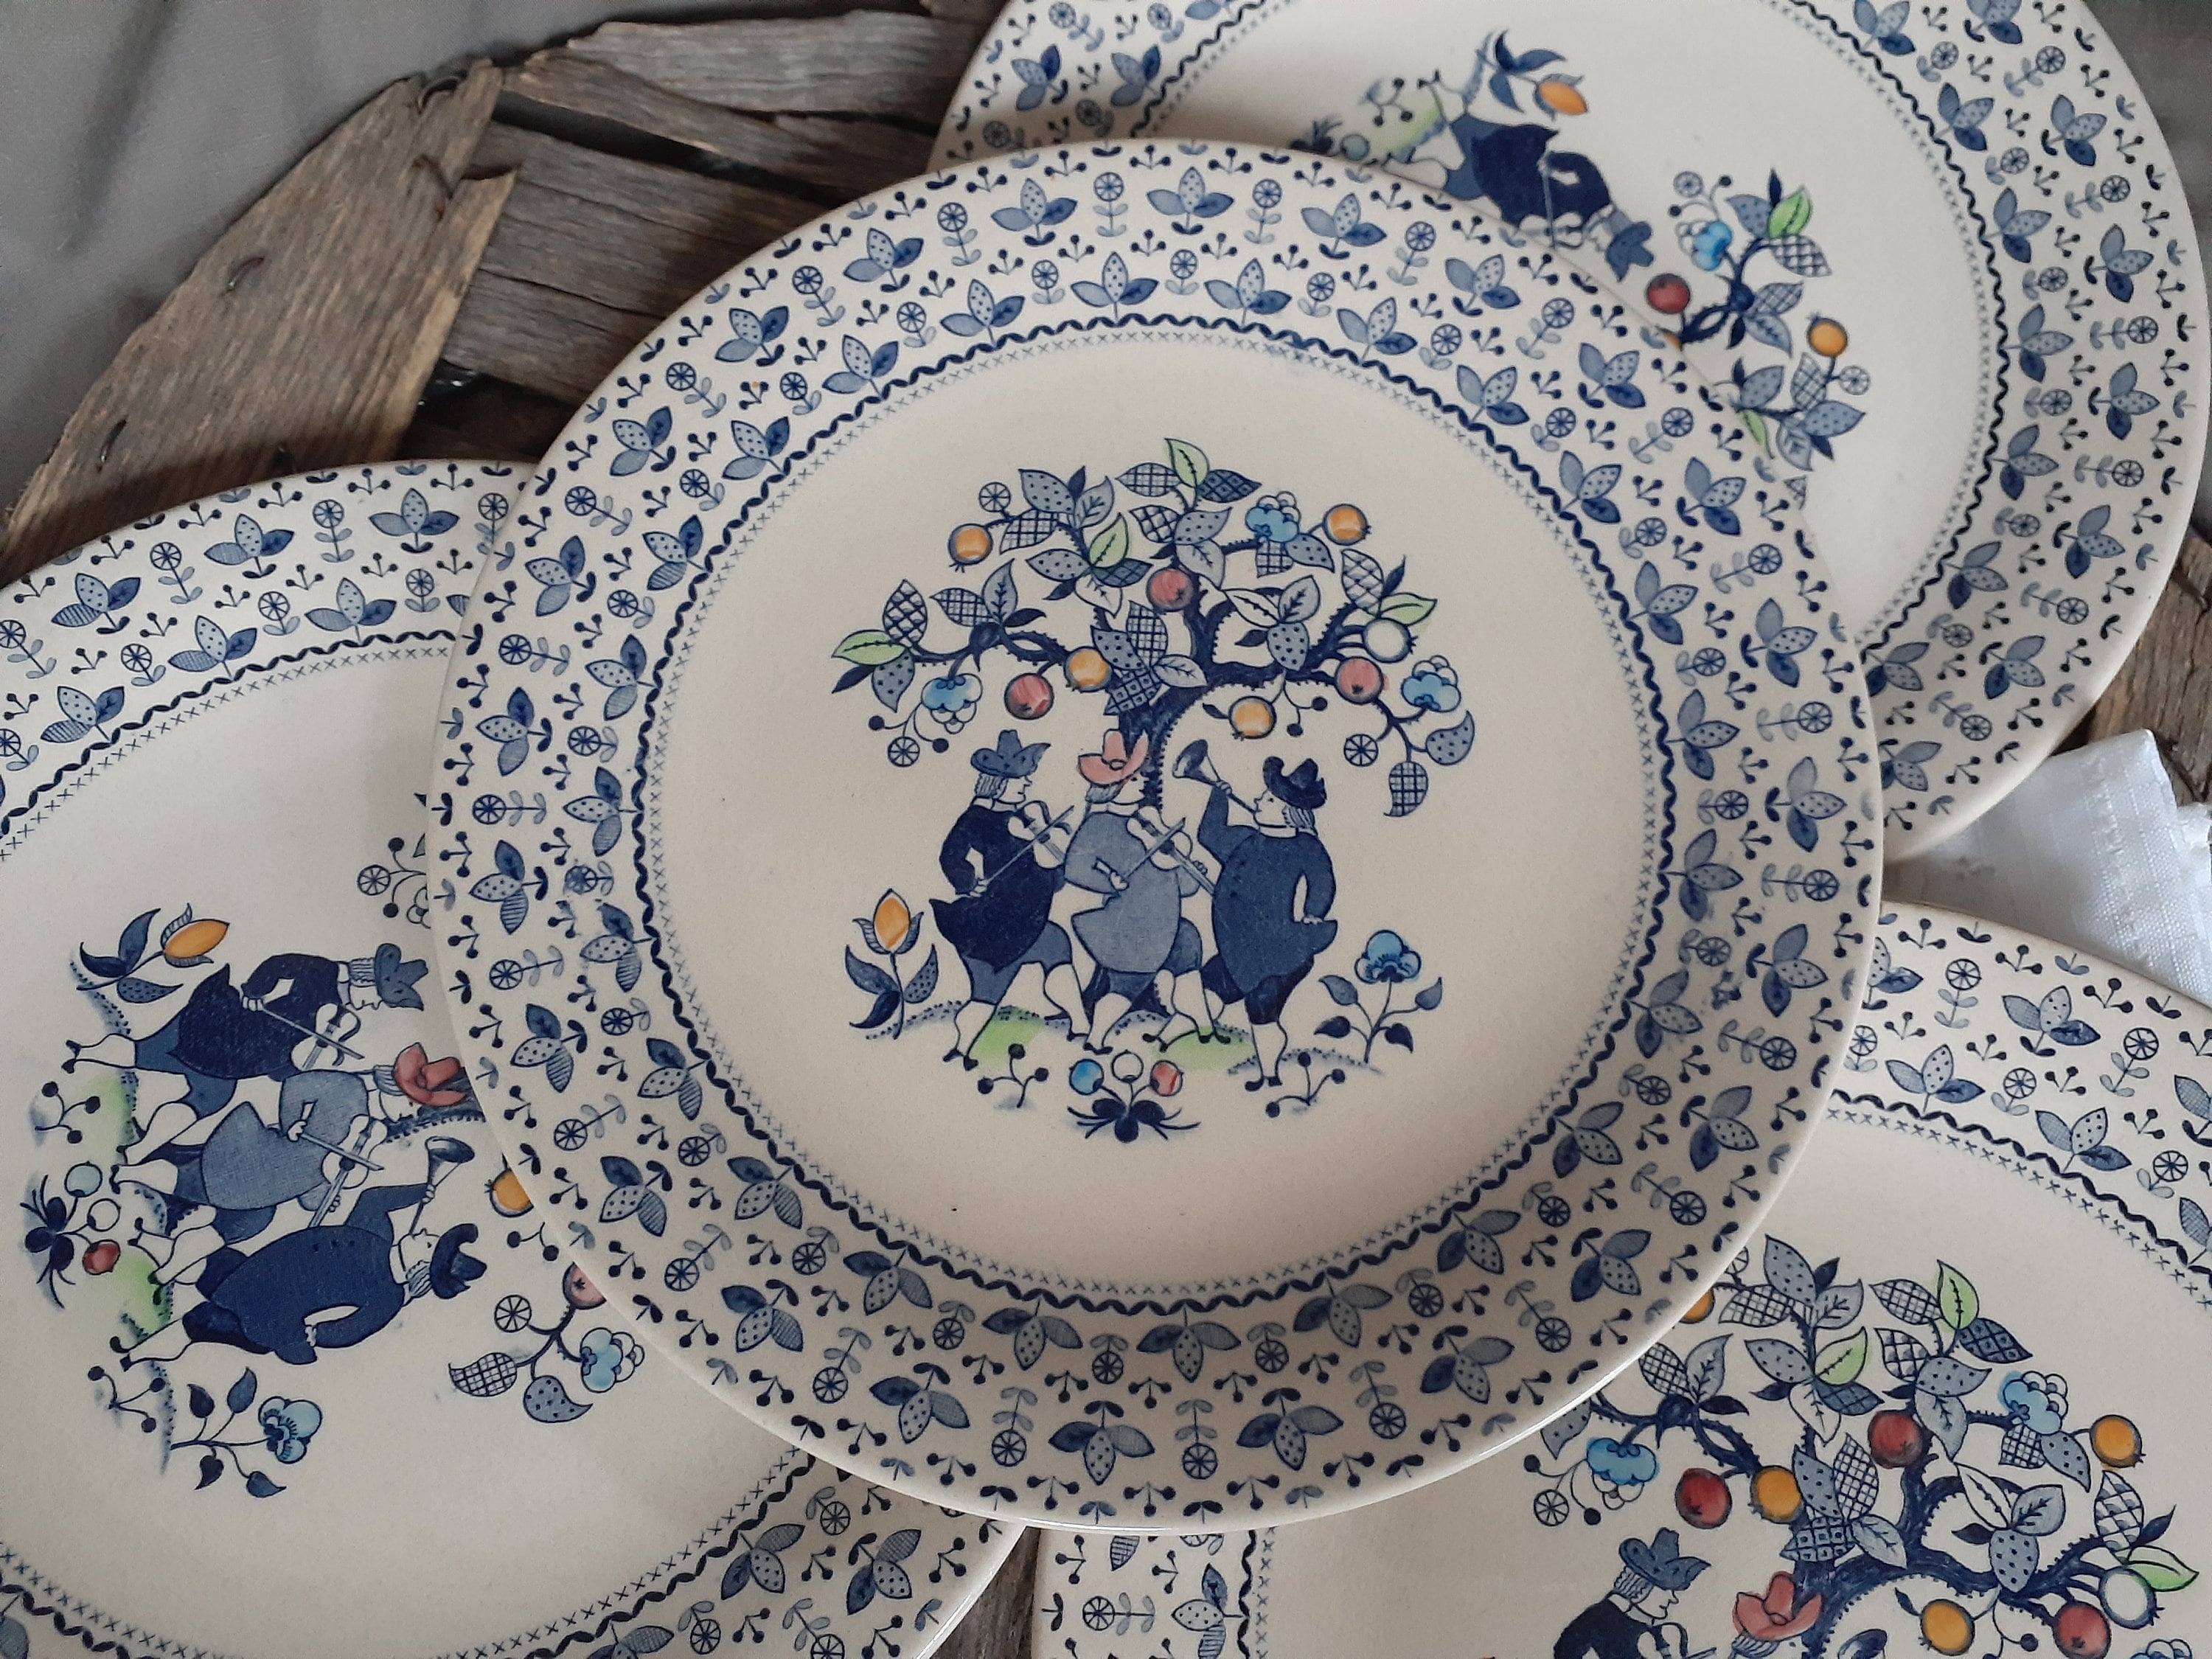 Vintage Enamel Plates, Set of 3, White Enameled Plate With Blue